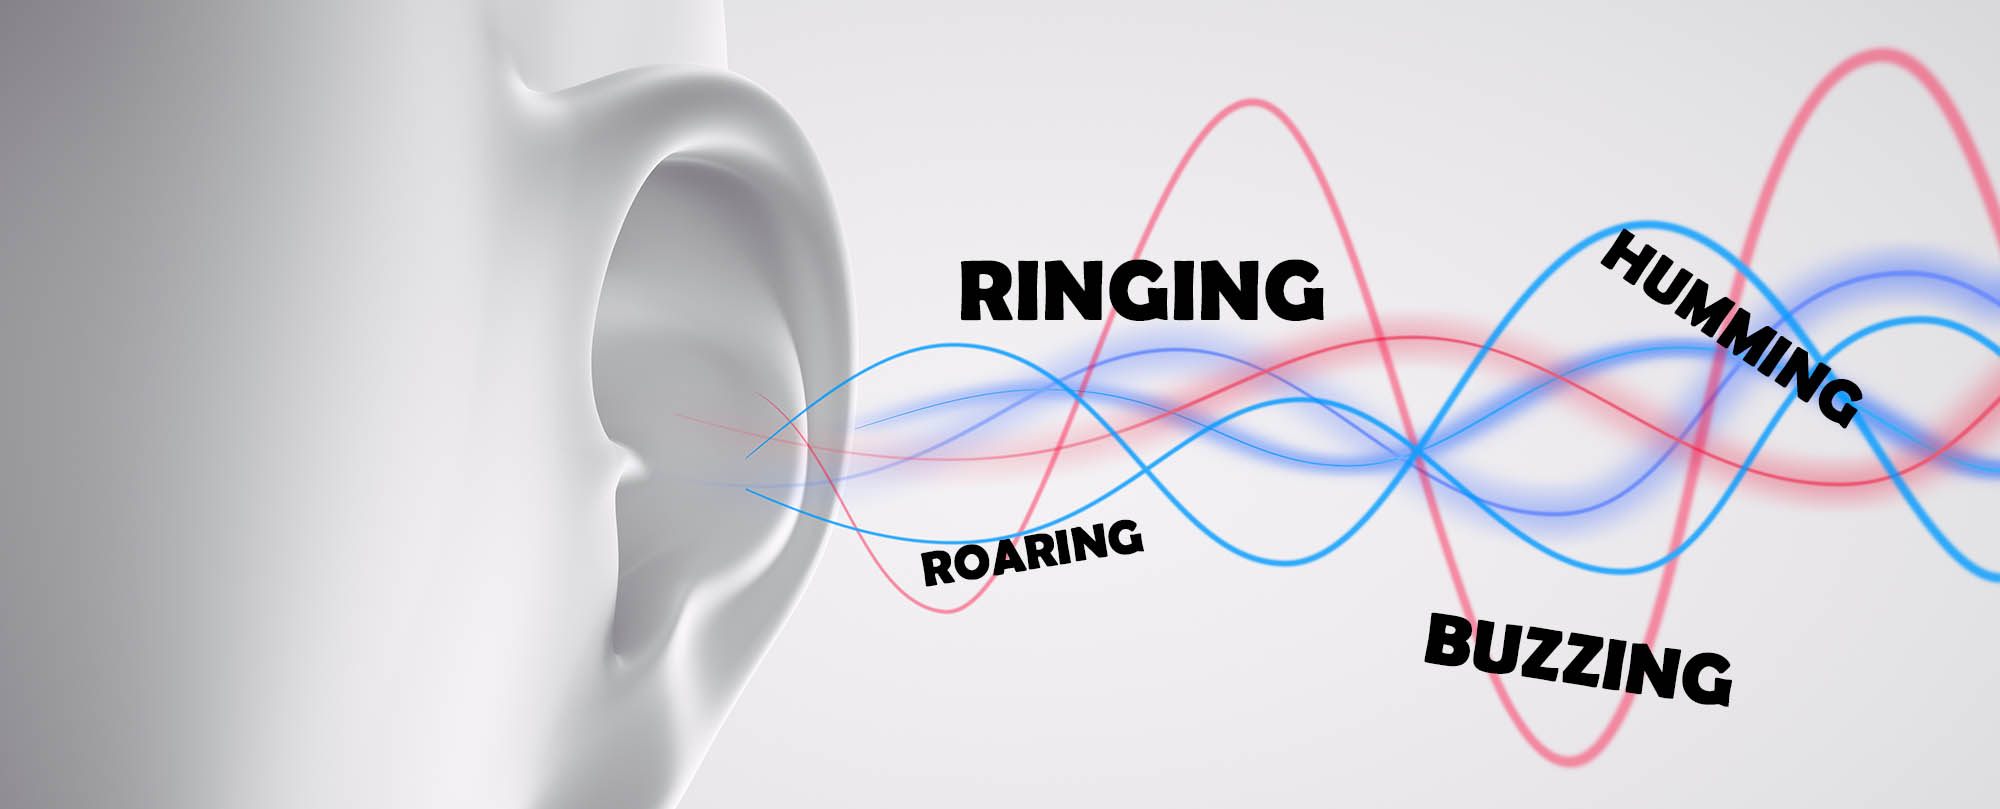 hearing wales, tinnitus, ringing ears, buzzing ears, hearing loss, hearing care, hearing aids, tinnitus awareness